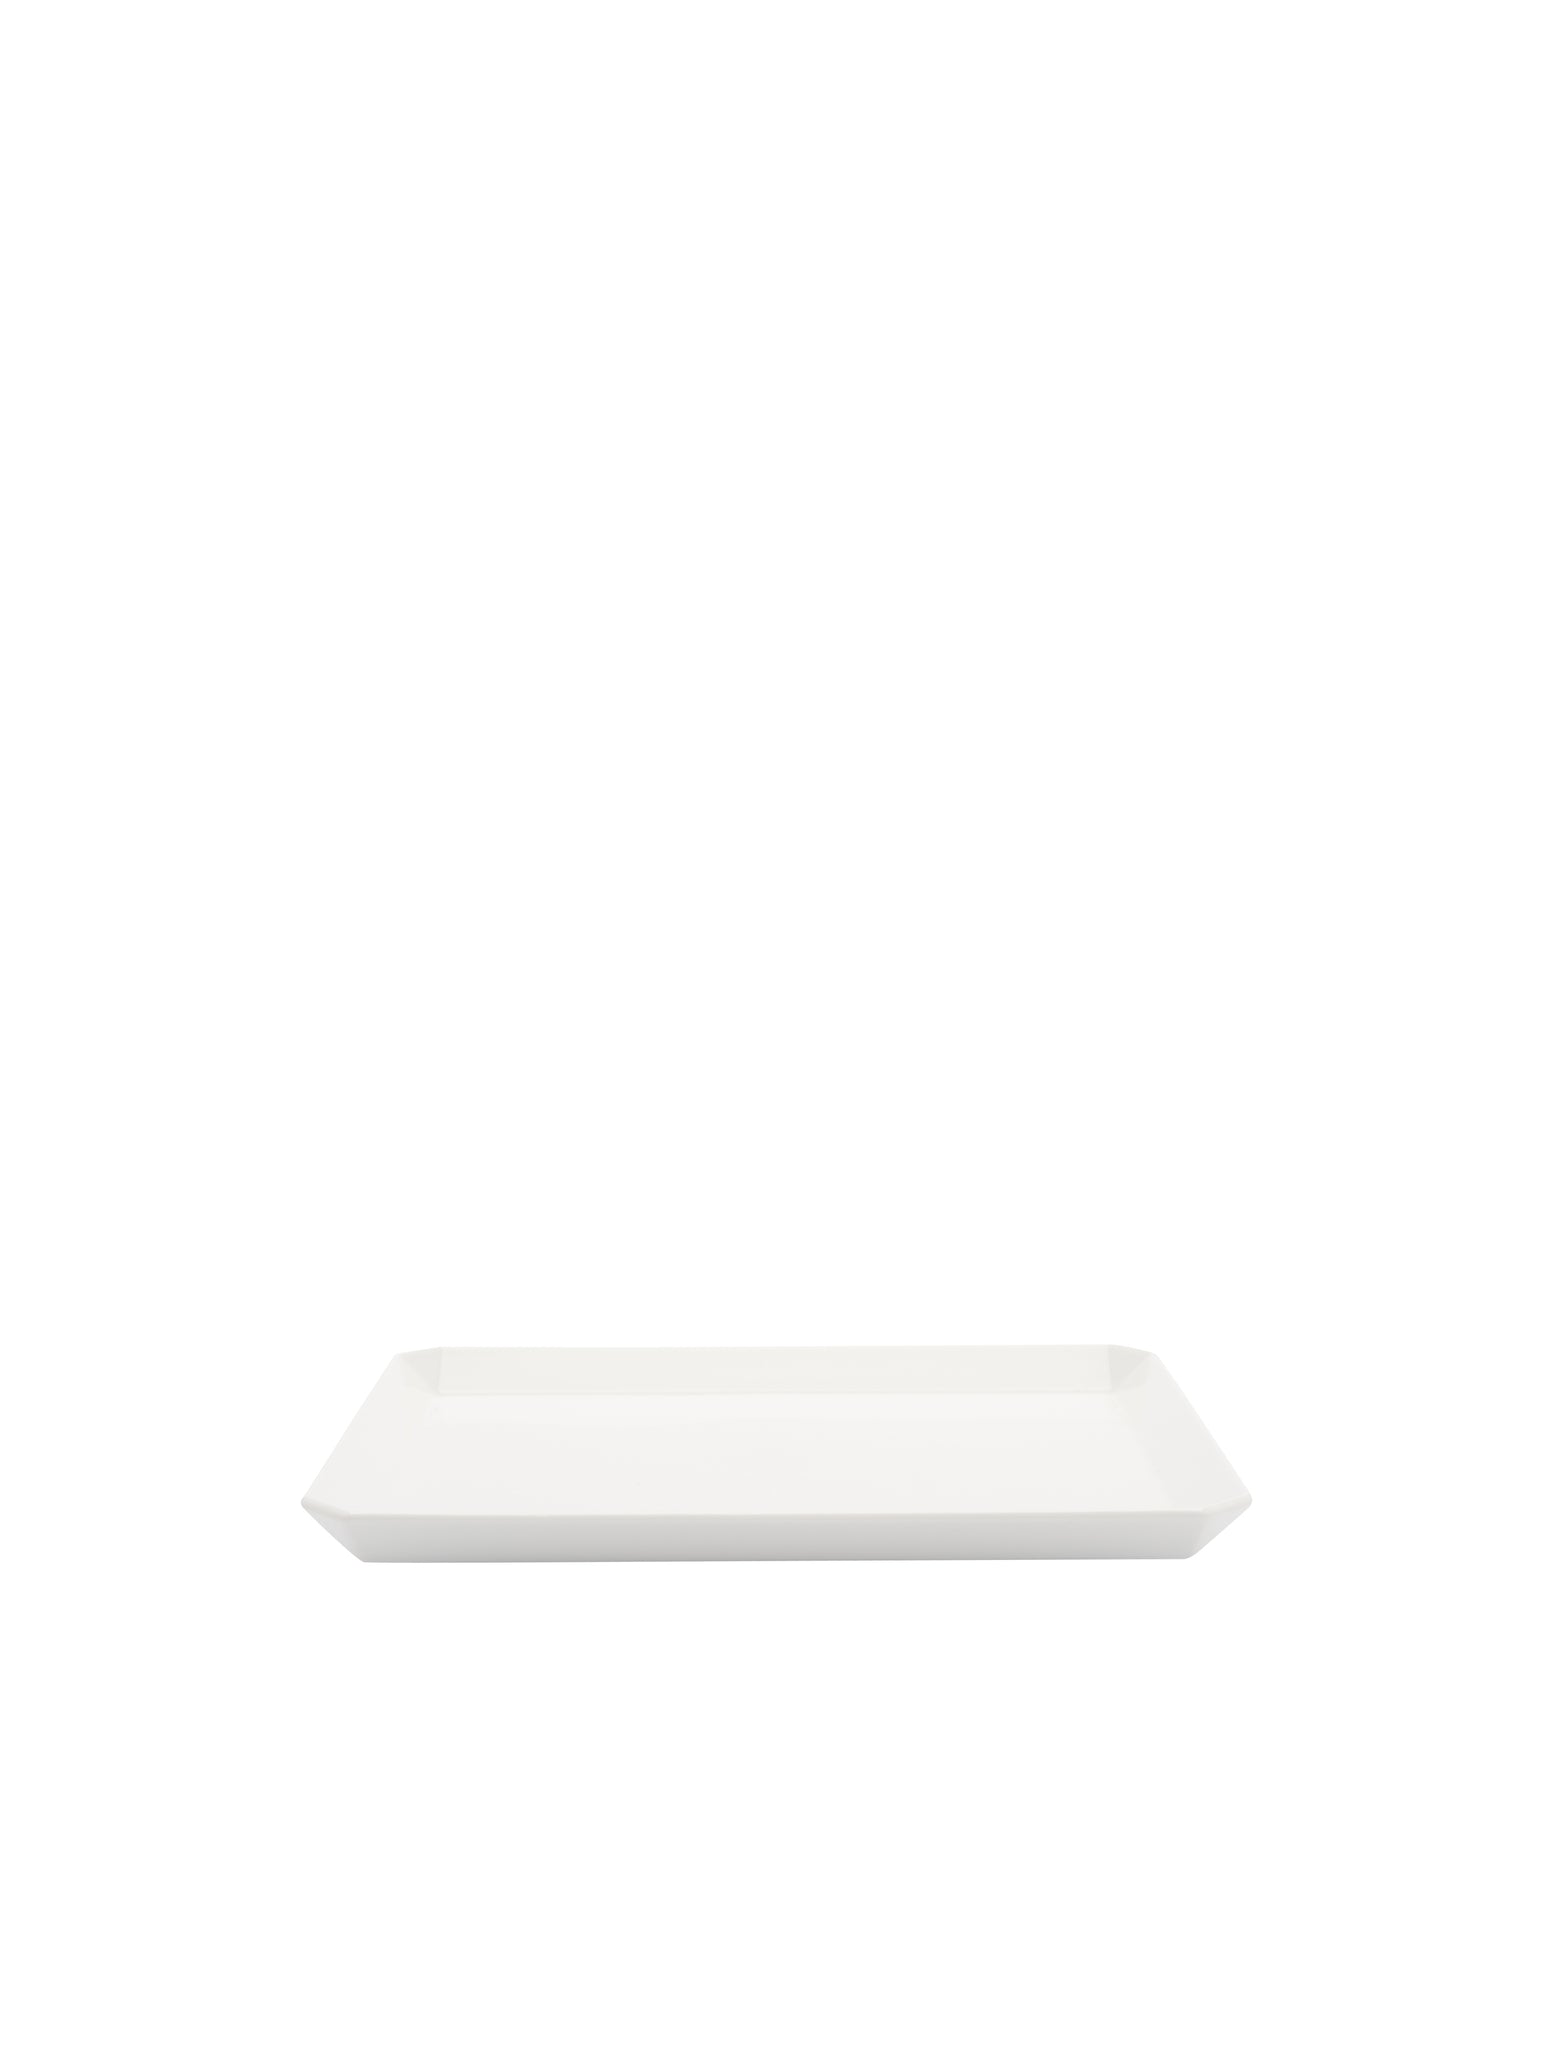 TY Square Plate 200 glazed white